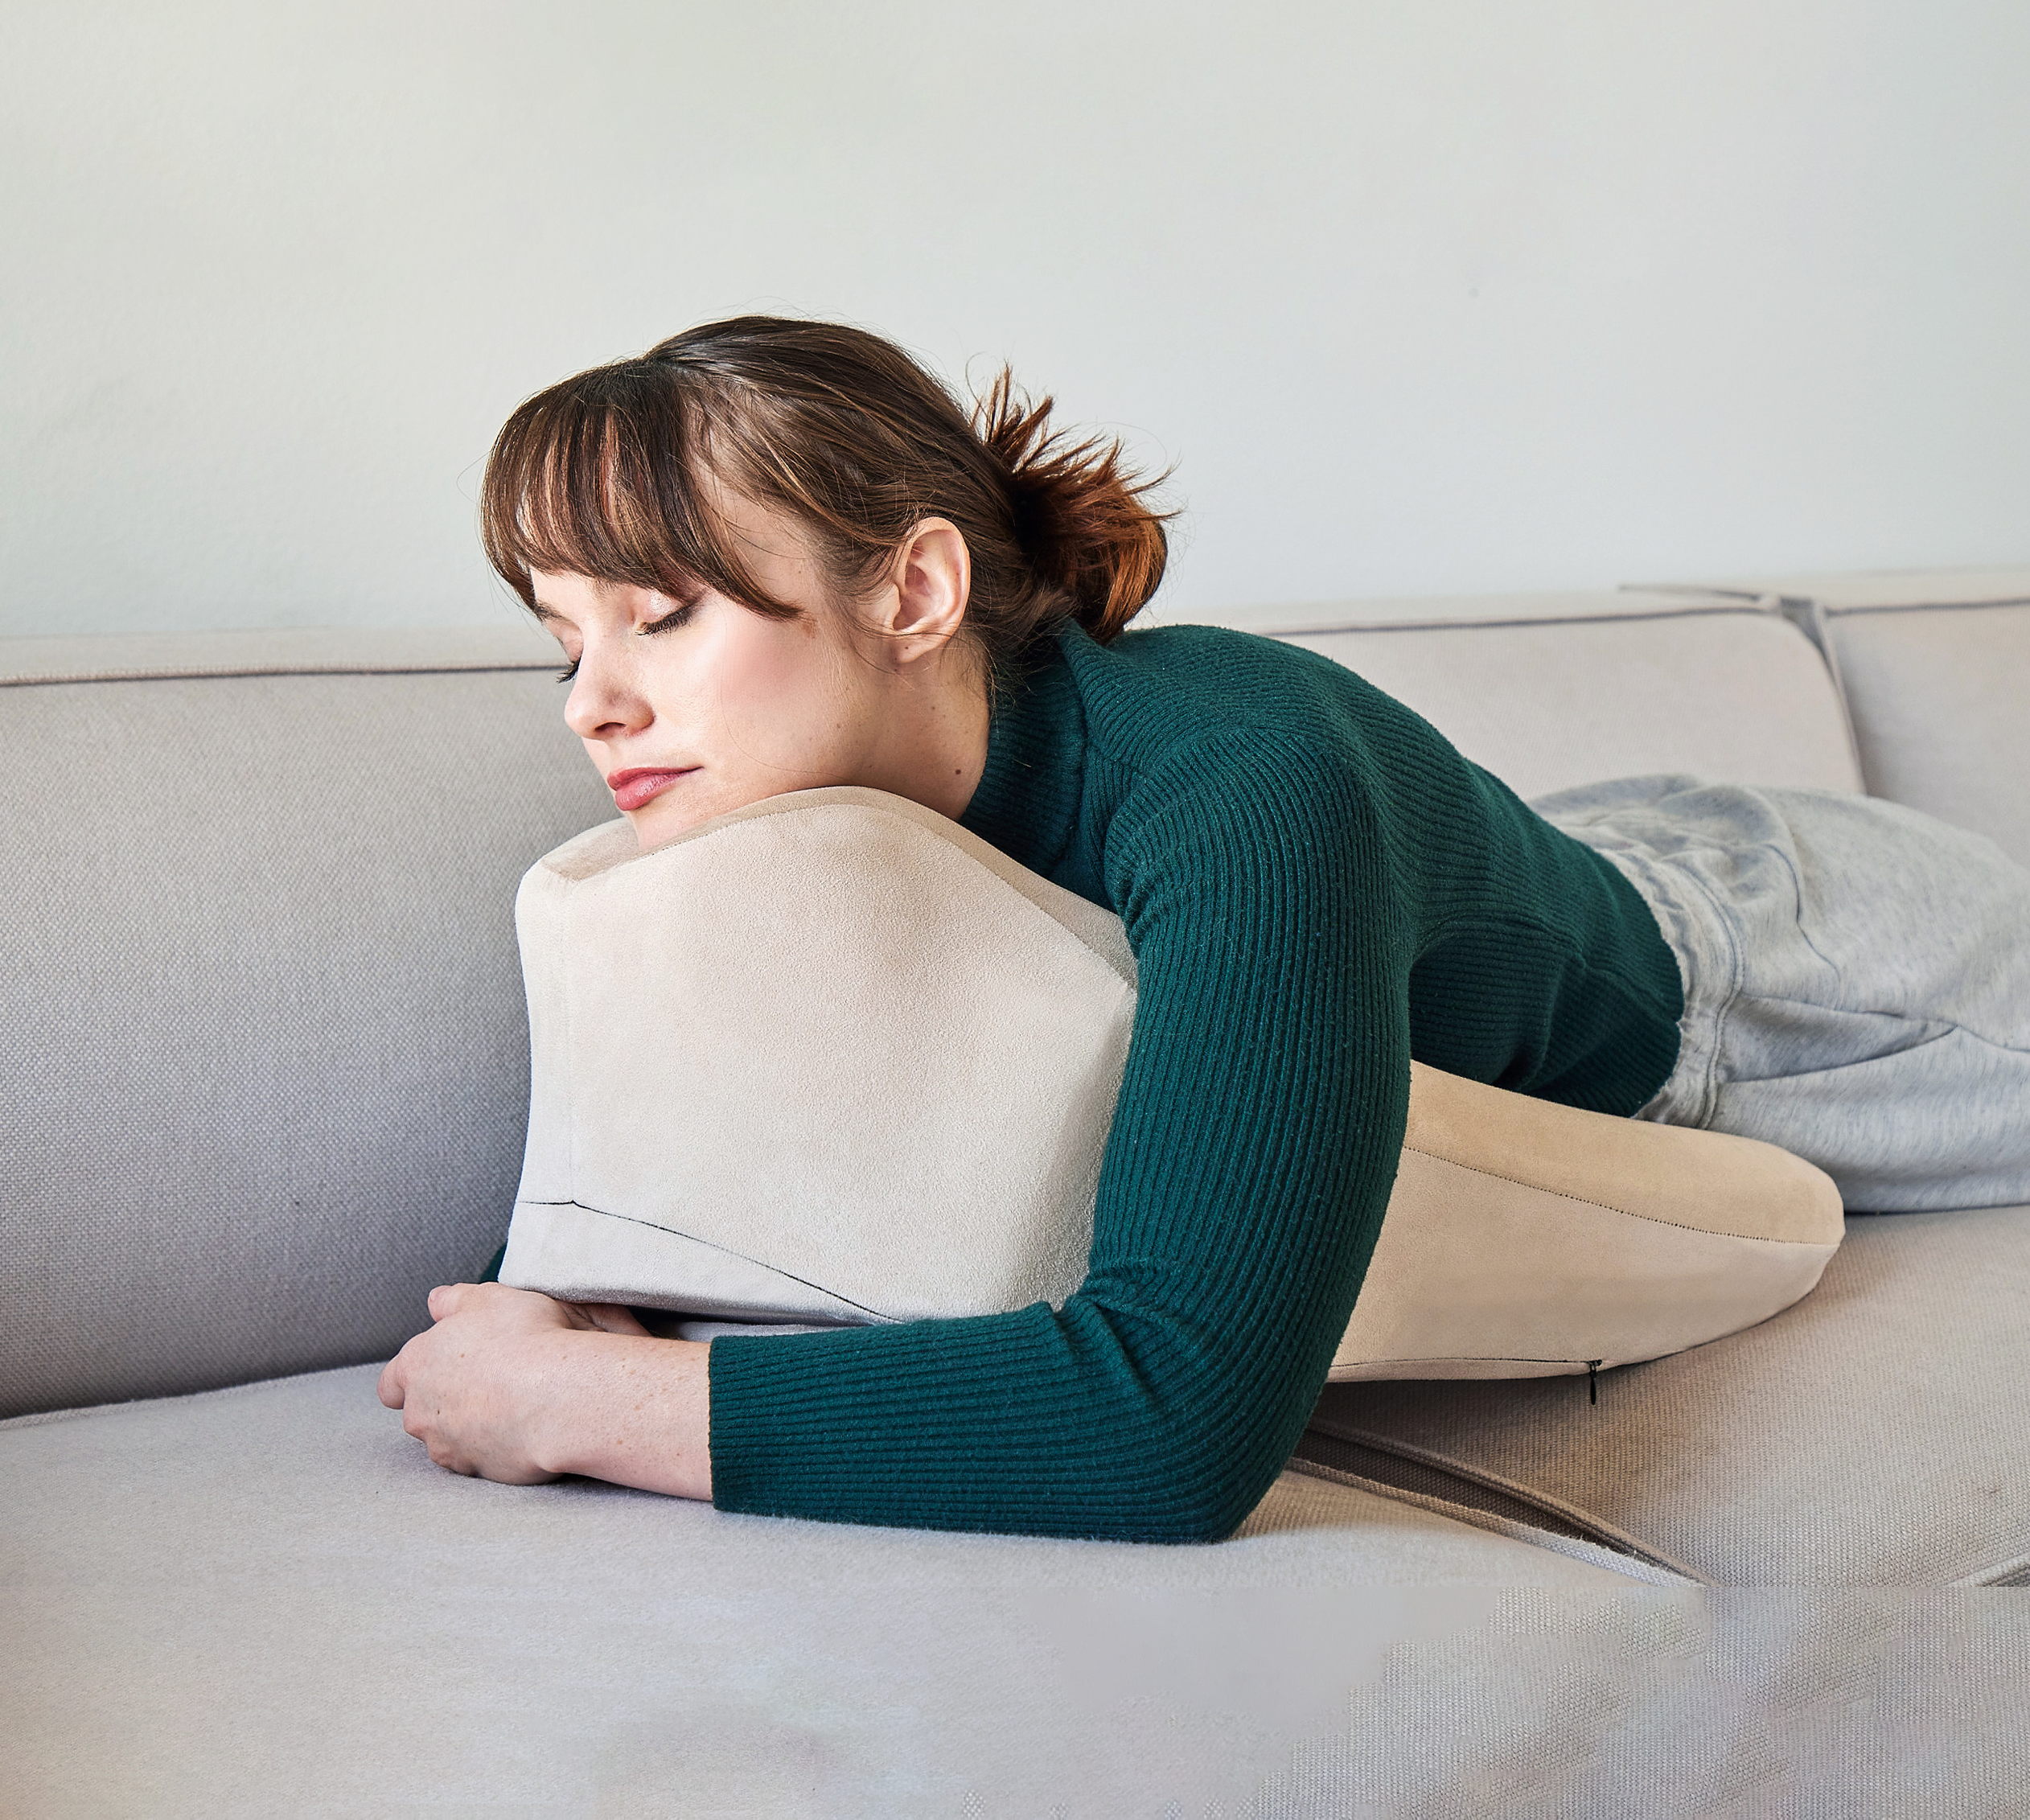 conceptnatal - Prone positioning cushion